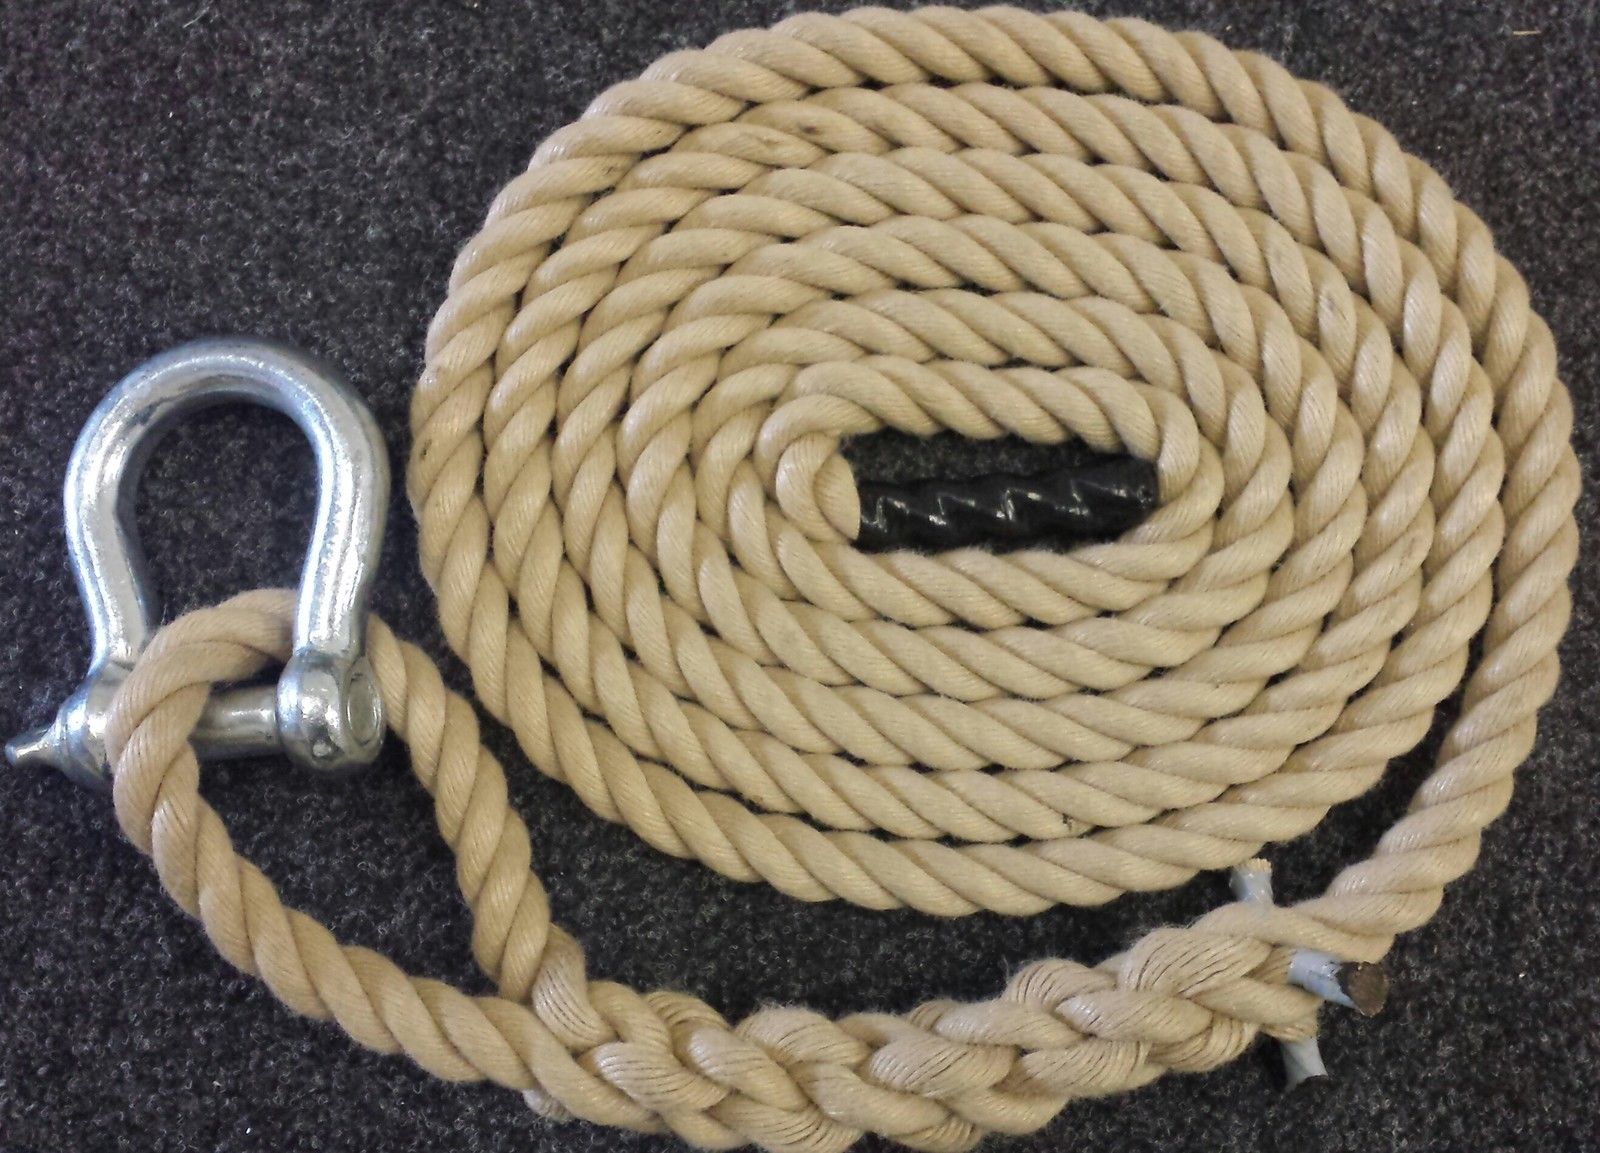 Choose Length Fitness 32mm Synthetic Hemp Gym Climbing Rope Training 